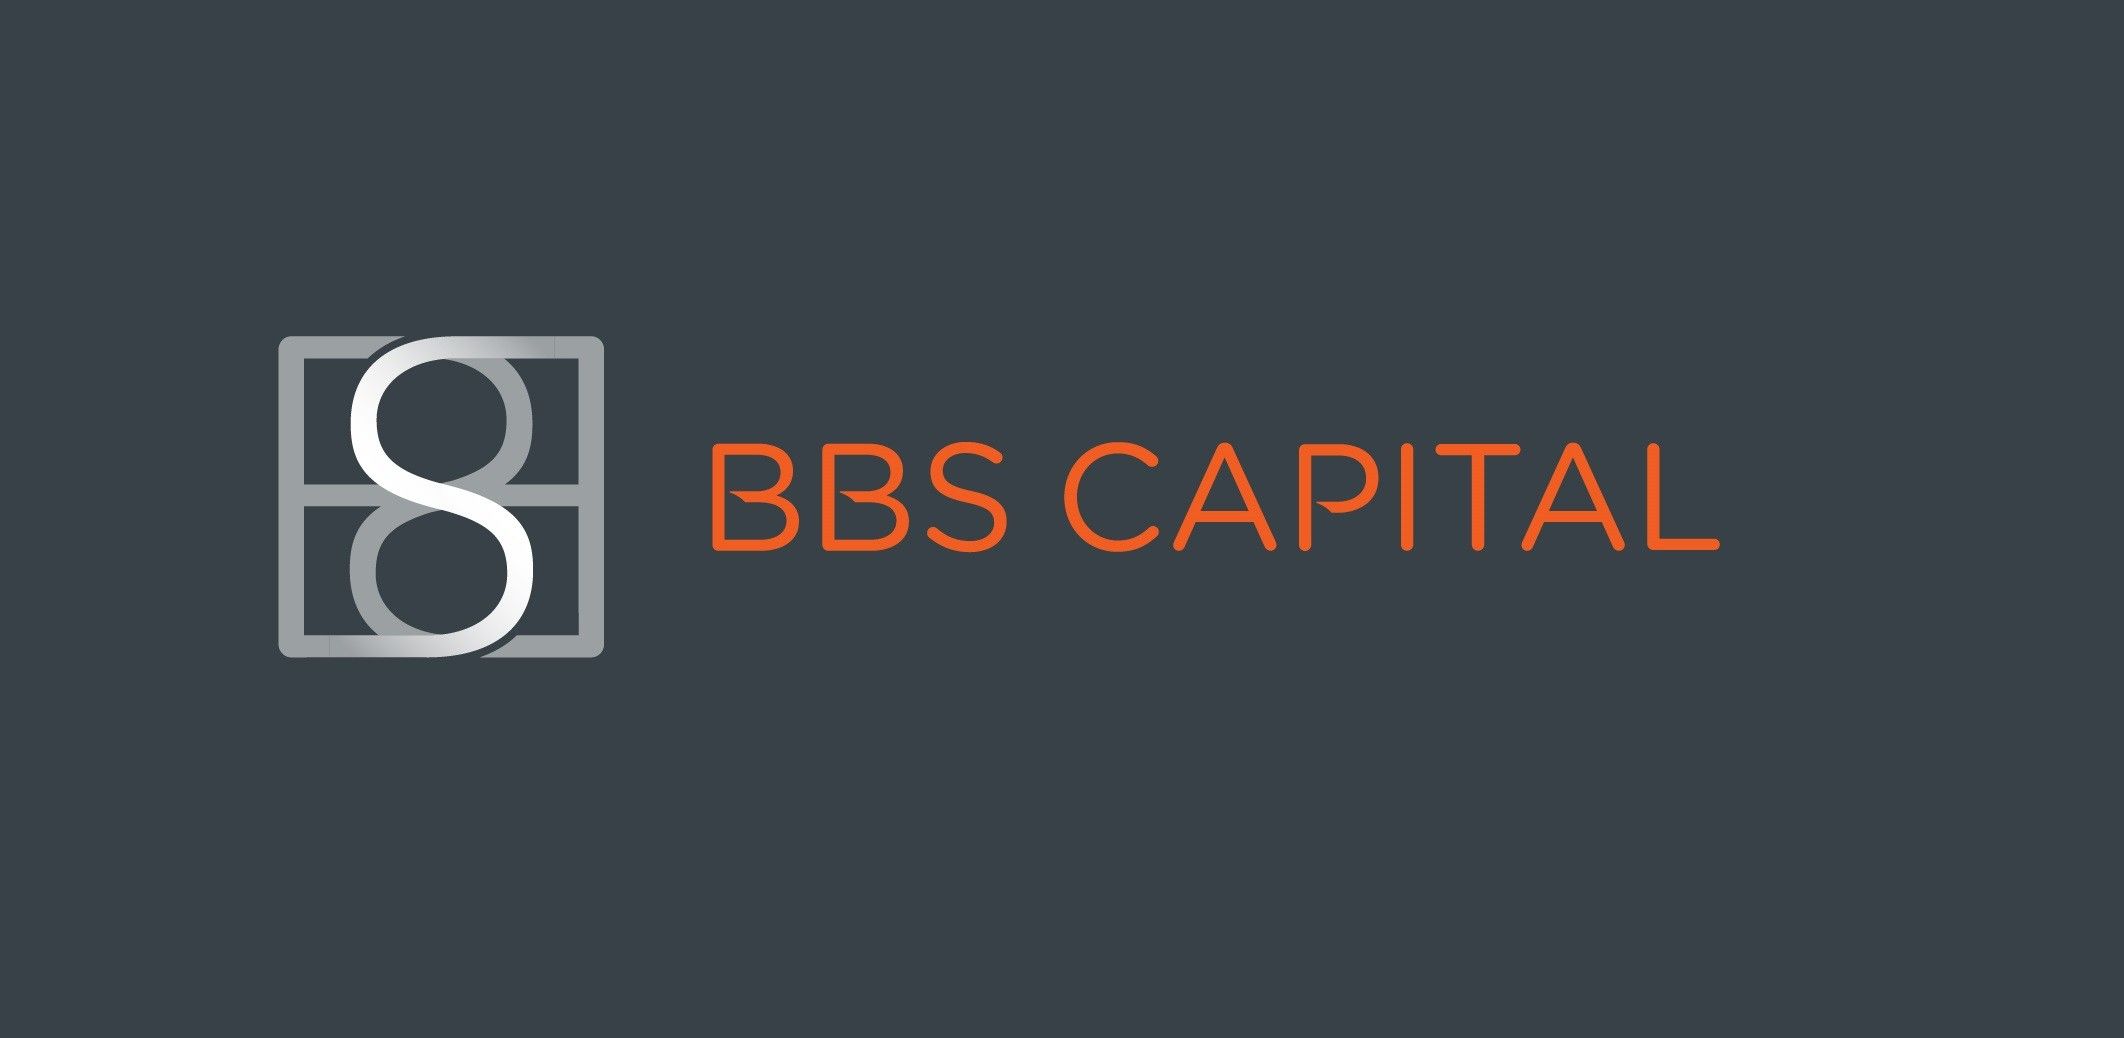 BSS capital